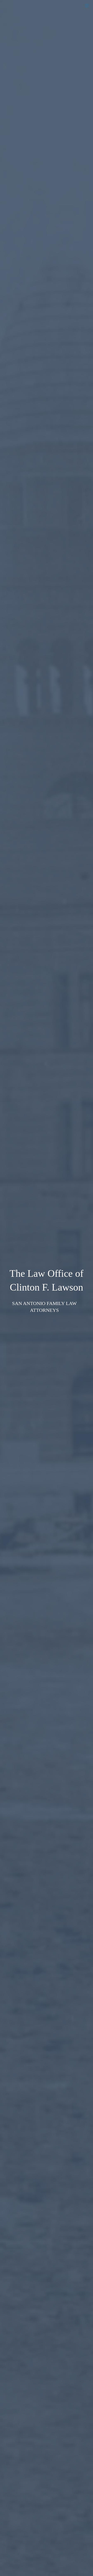 The Law Office of Clinton F. Lawson - San Antonio TX Lawyers